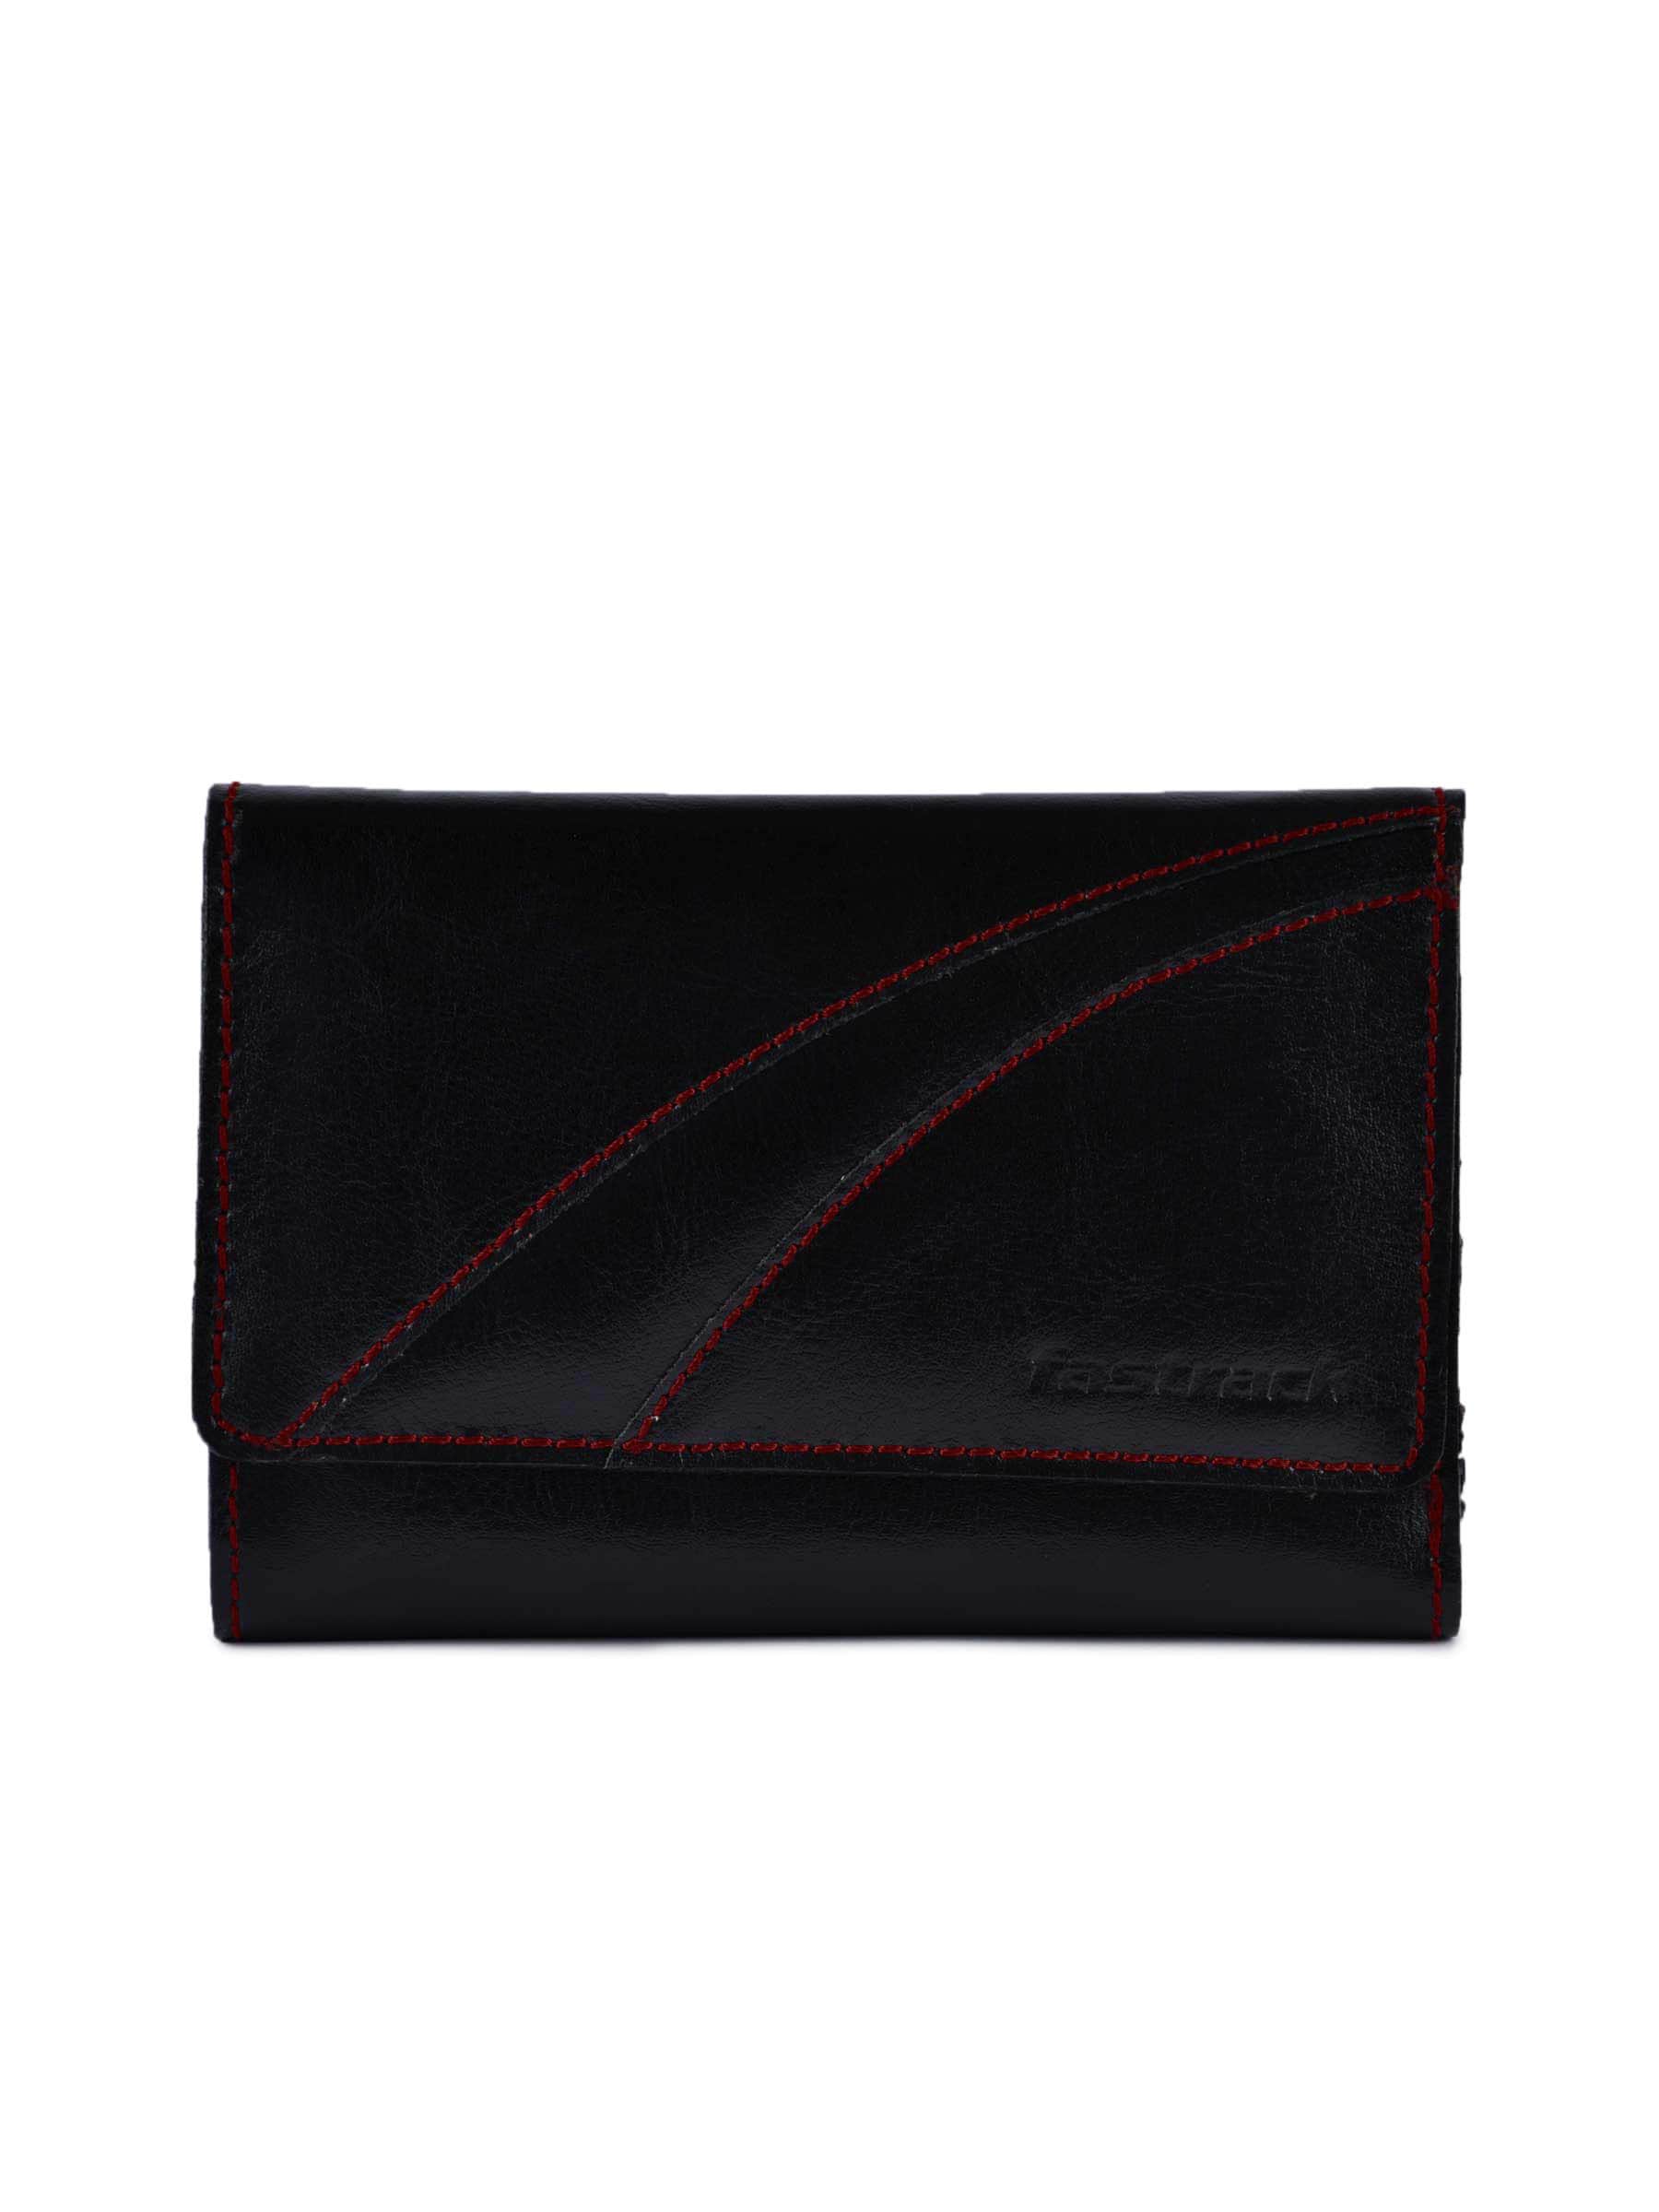 Fastrack Women Leather Black Wallet